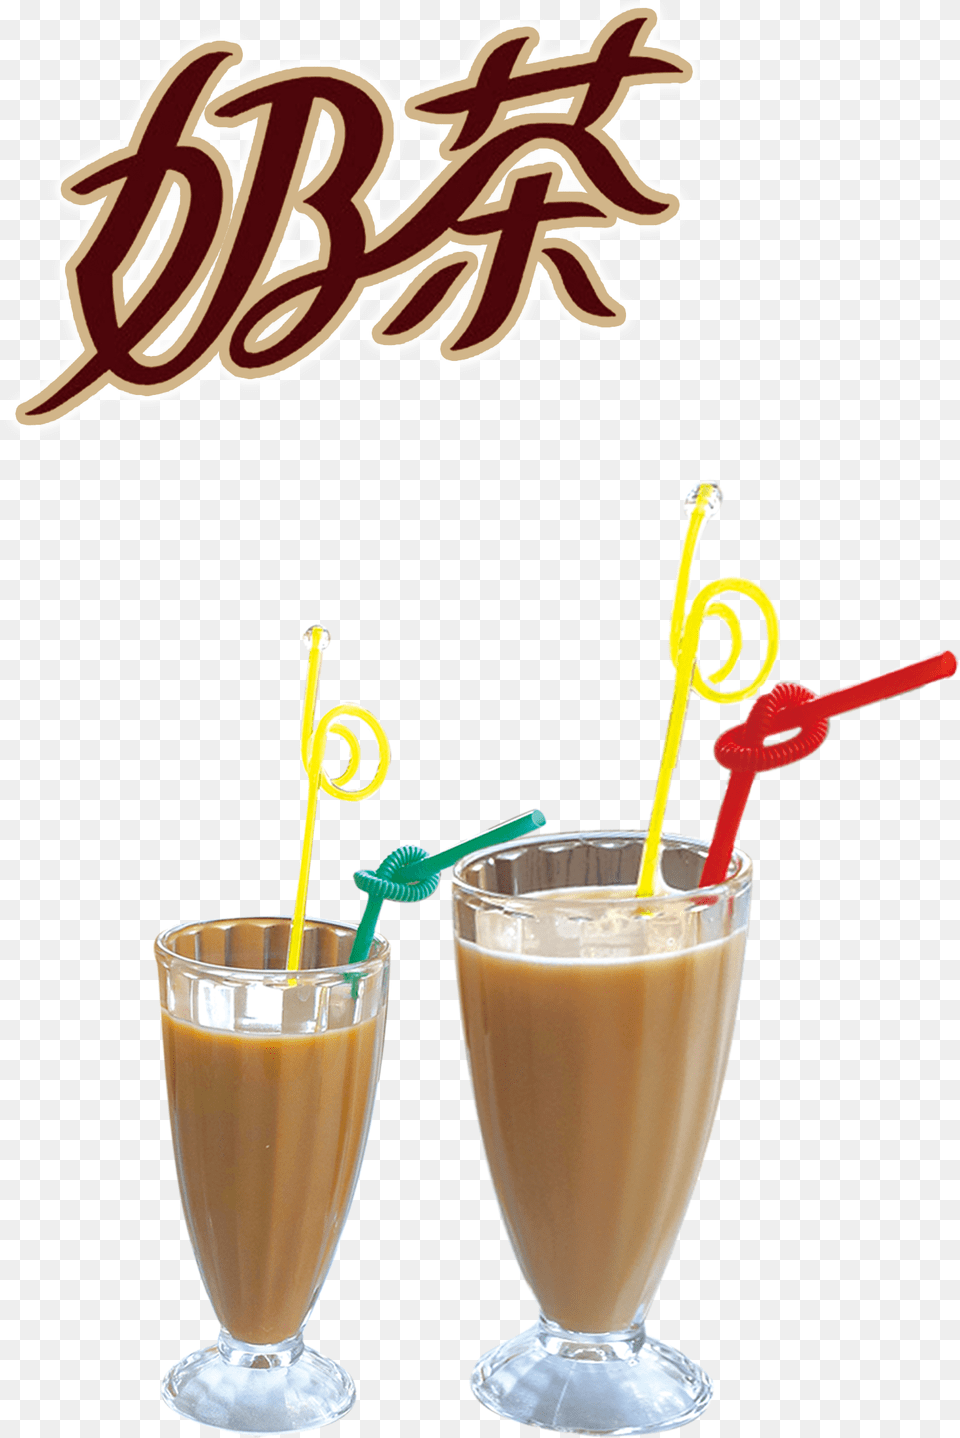 Ice Cream Juice Coffee Hong Kong Style Milk Tea Milk Tea, Beverage, Smoothie, Milkshake, Alcohol Png Image